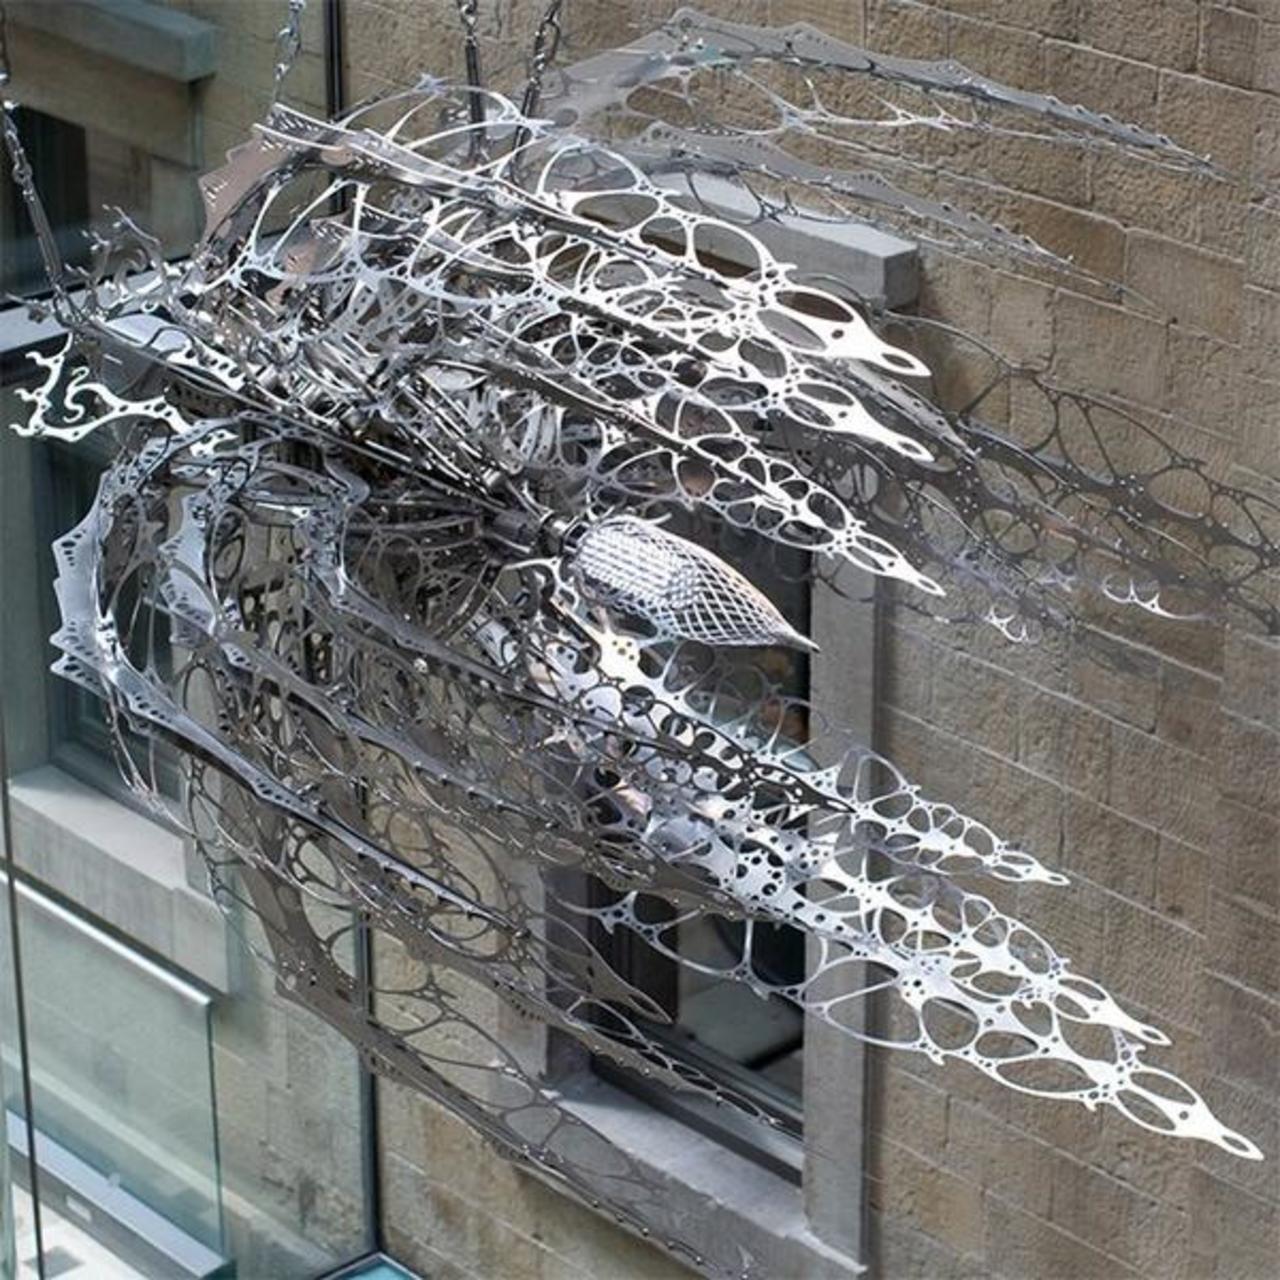 Intricately composed kinetic sculptures of U-Ram Choe via @gerrybobrien: http://www.uram.net/ #sculpture #art http://t.co/z1QmwCobeE